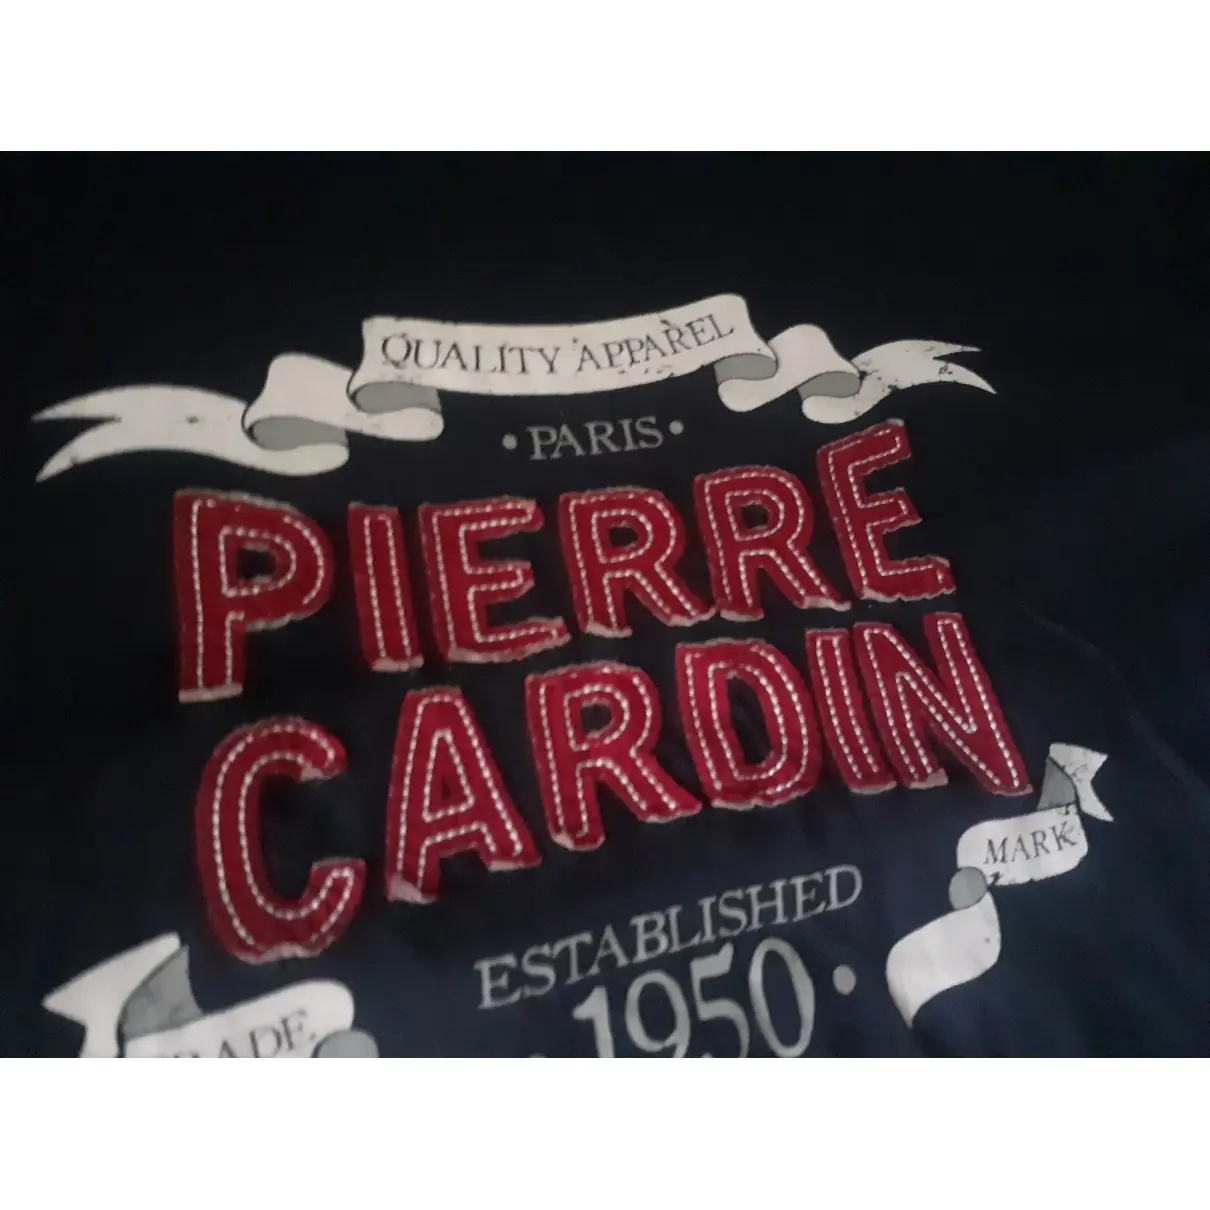 Buy Pierre Cardin T-shirt online - Vintage